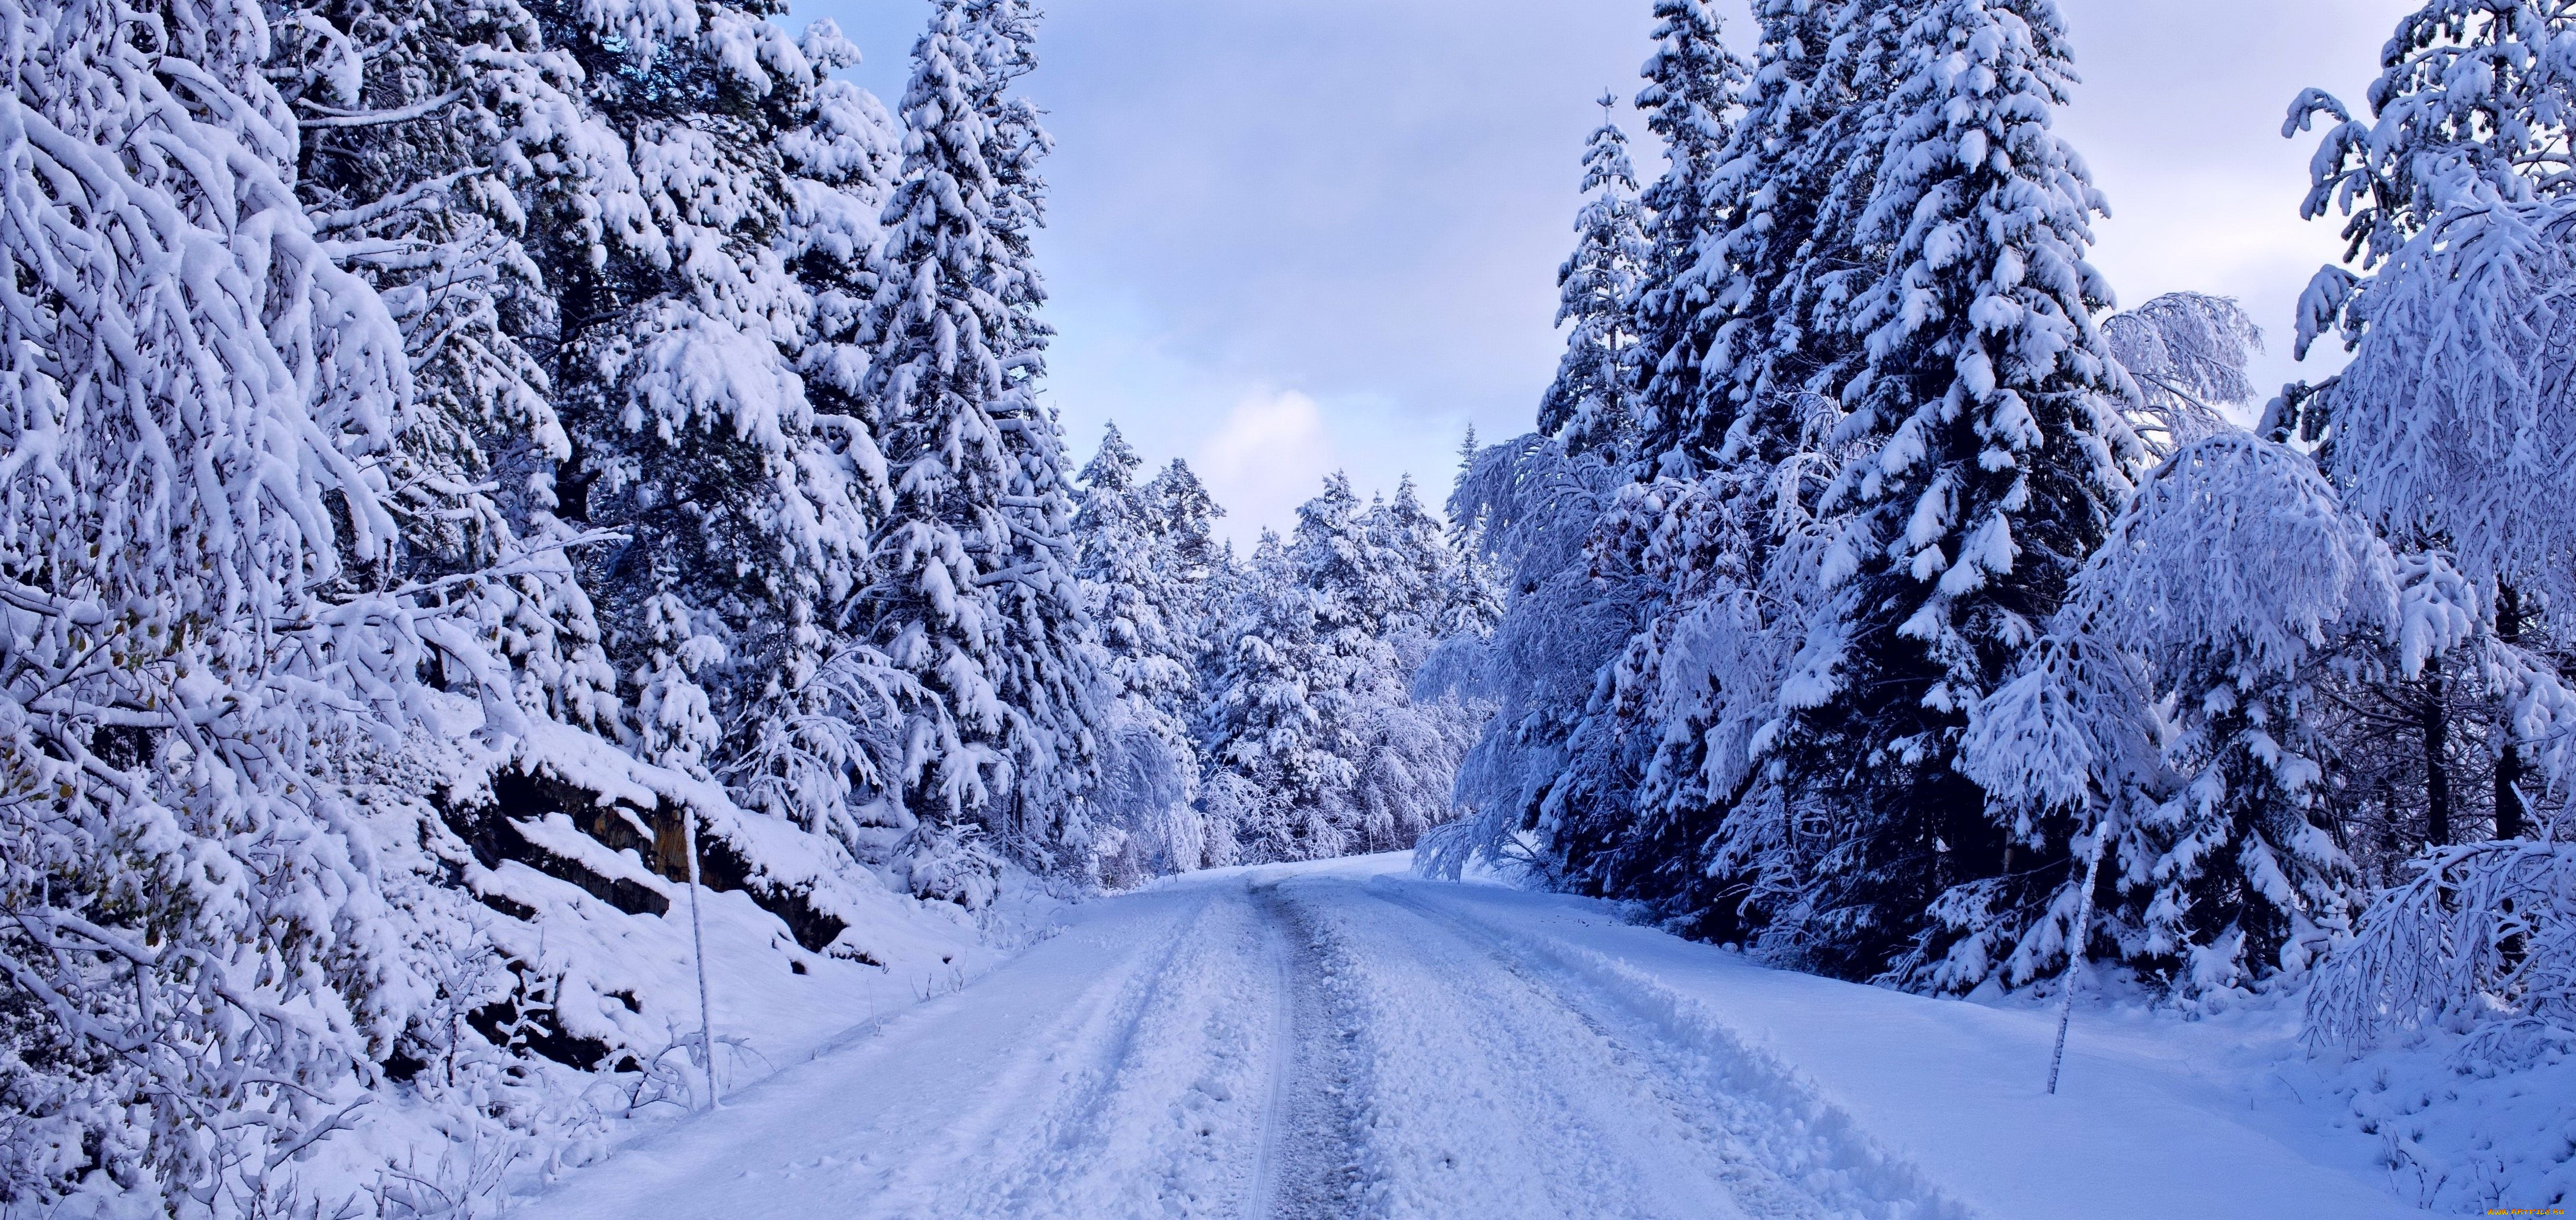 природа, зима, снег, лес, дорога, синева, ели, деревья